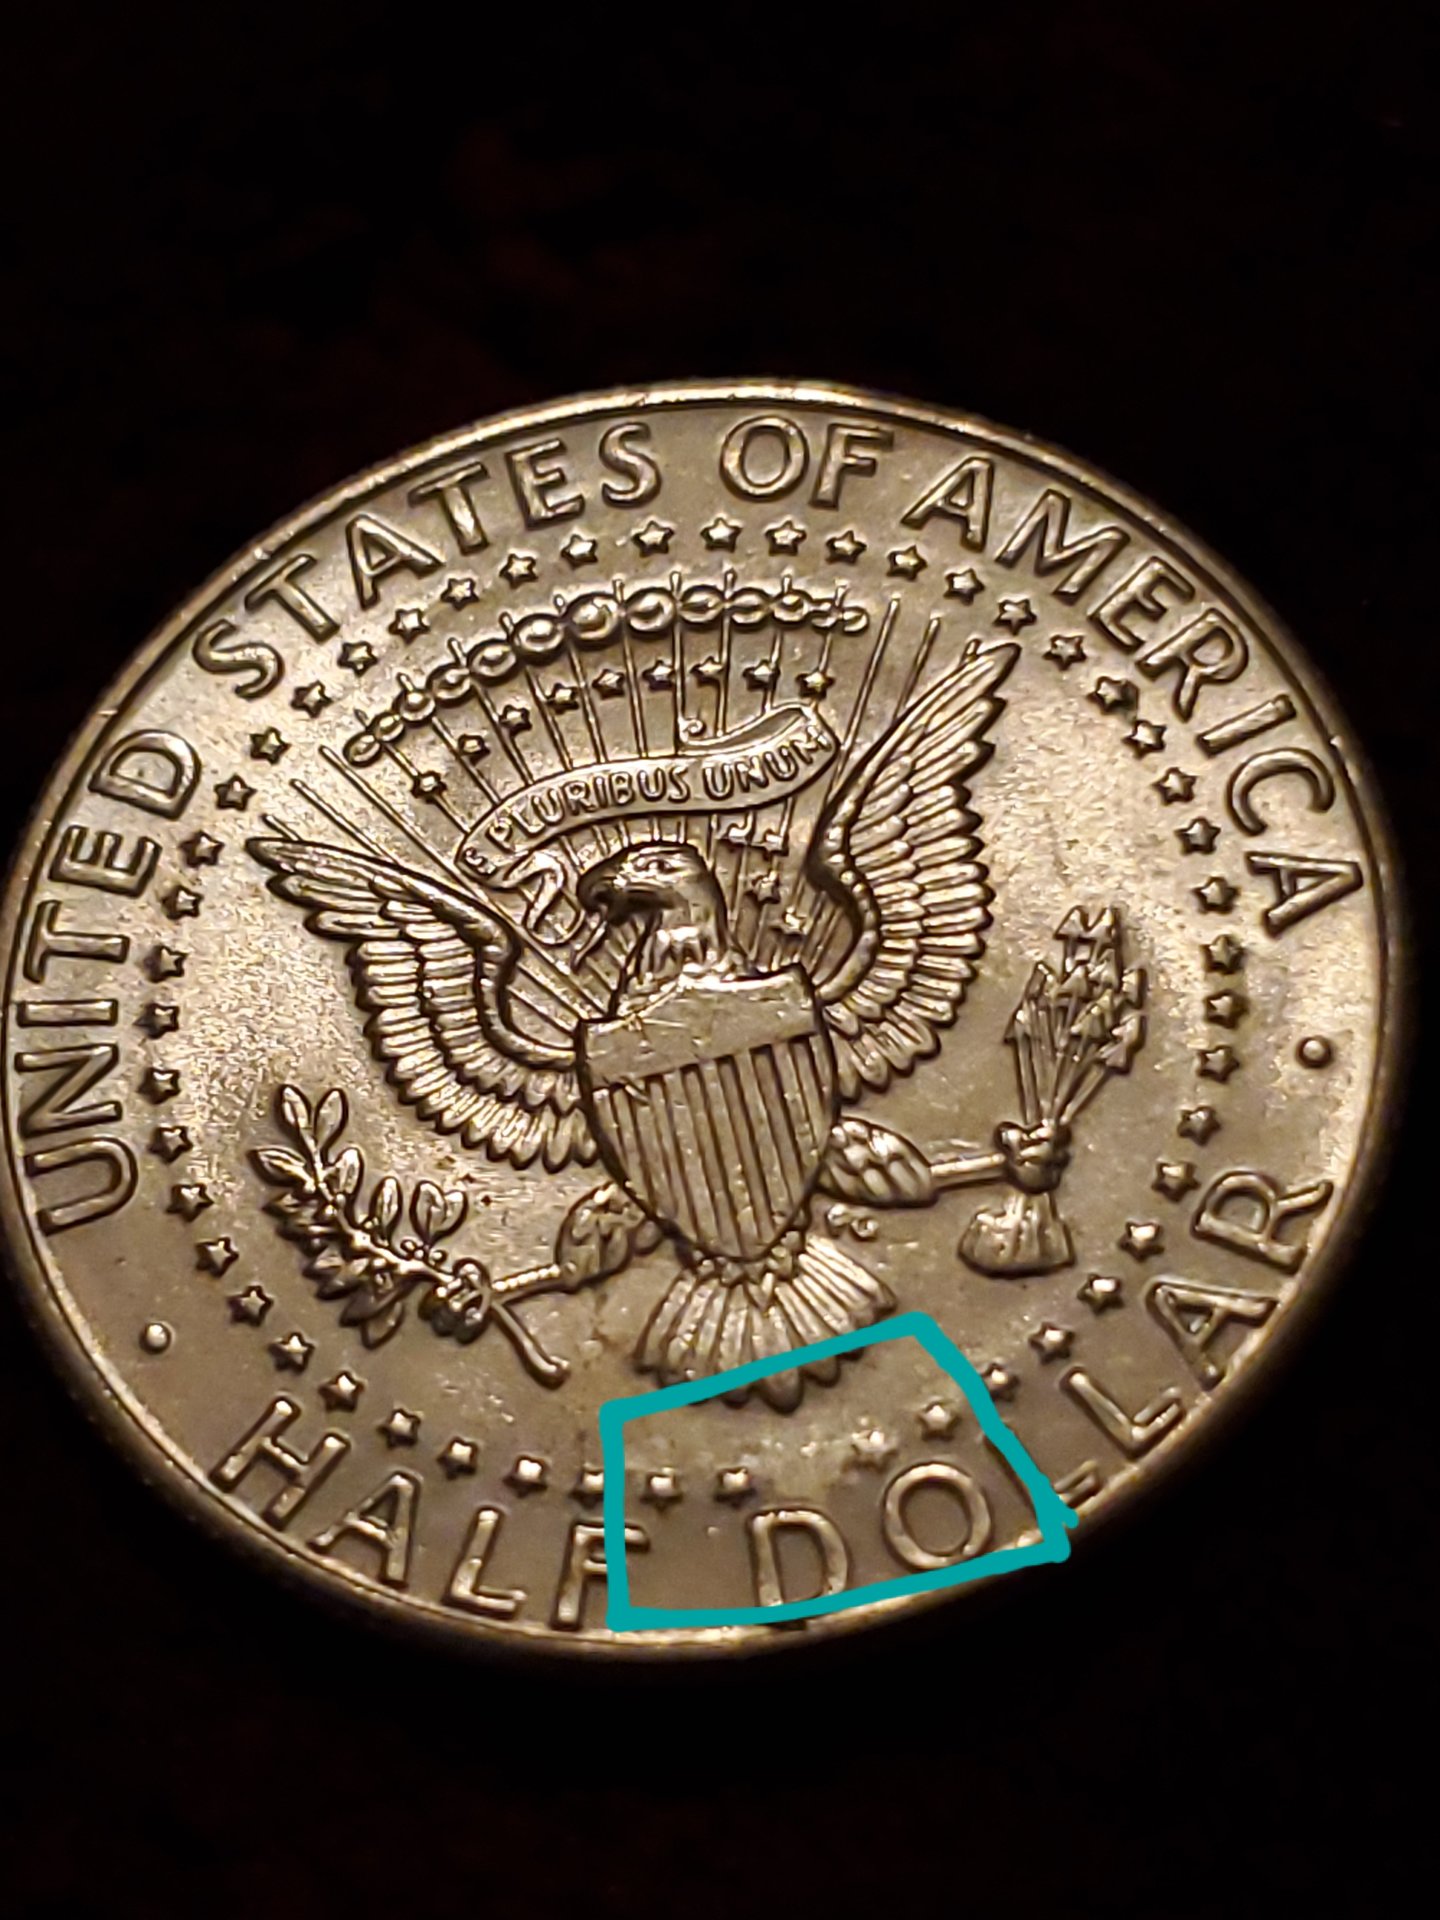 1989-D Kennedy Half Dollar - missing star? | Coin Talk